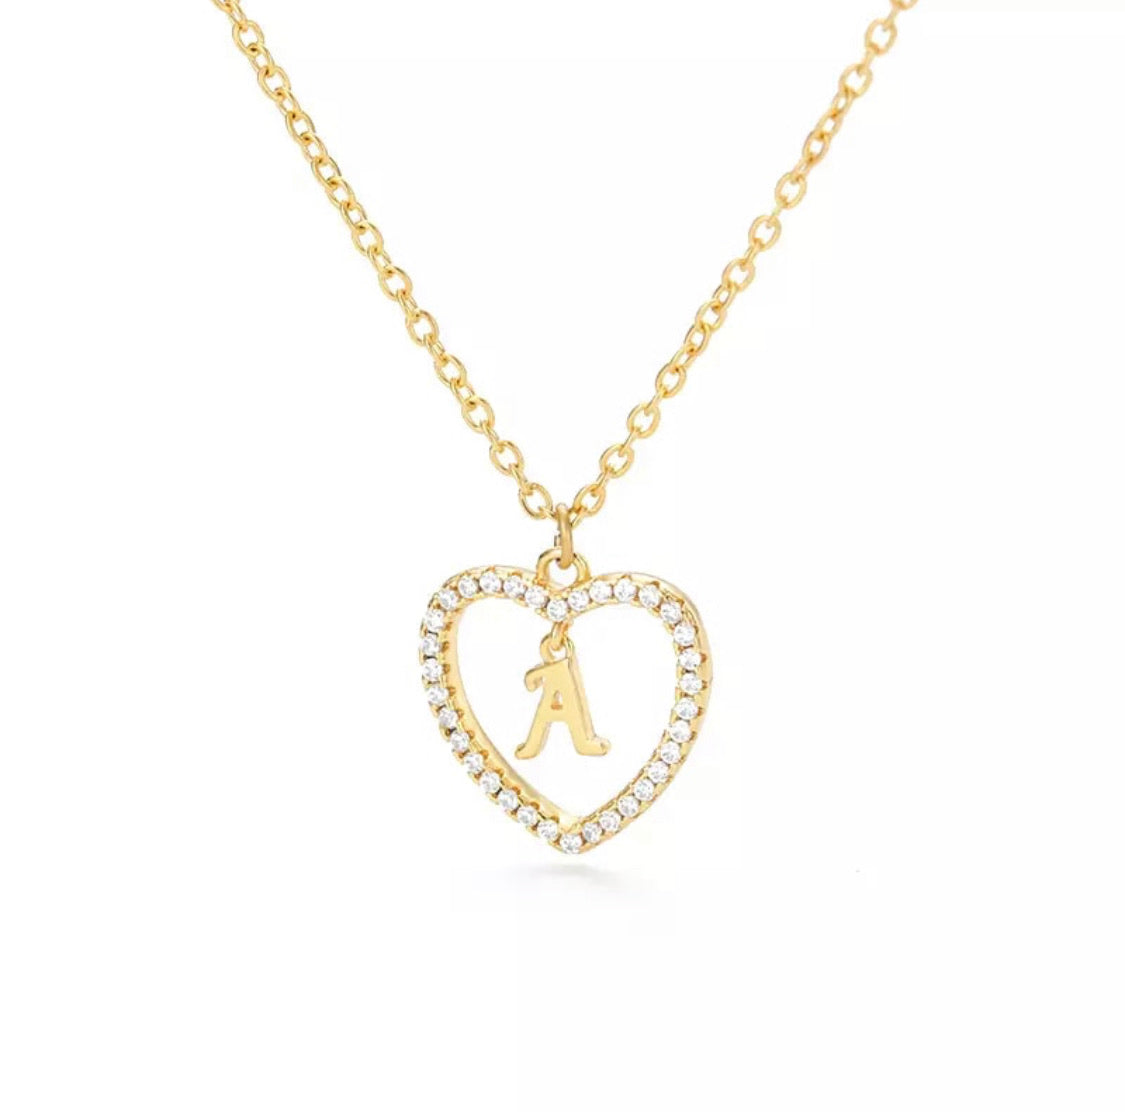 My Heart Initial Diamond Necklace - Noush Jewelry